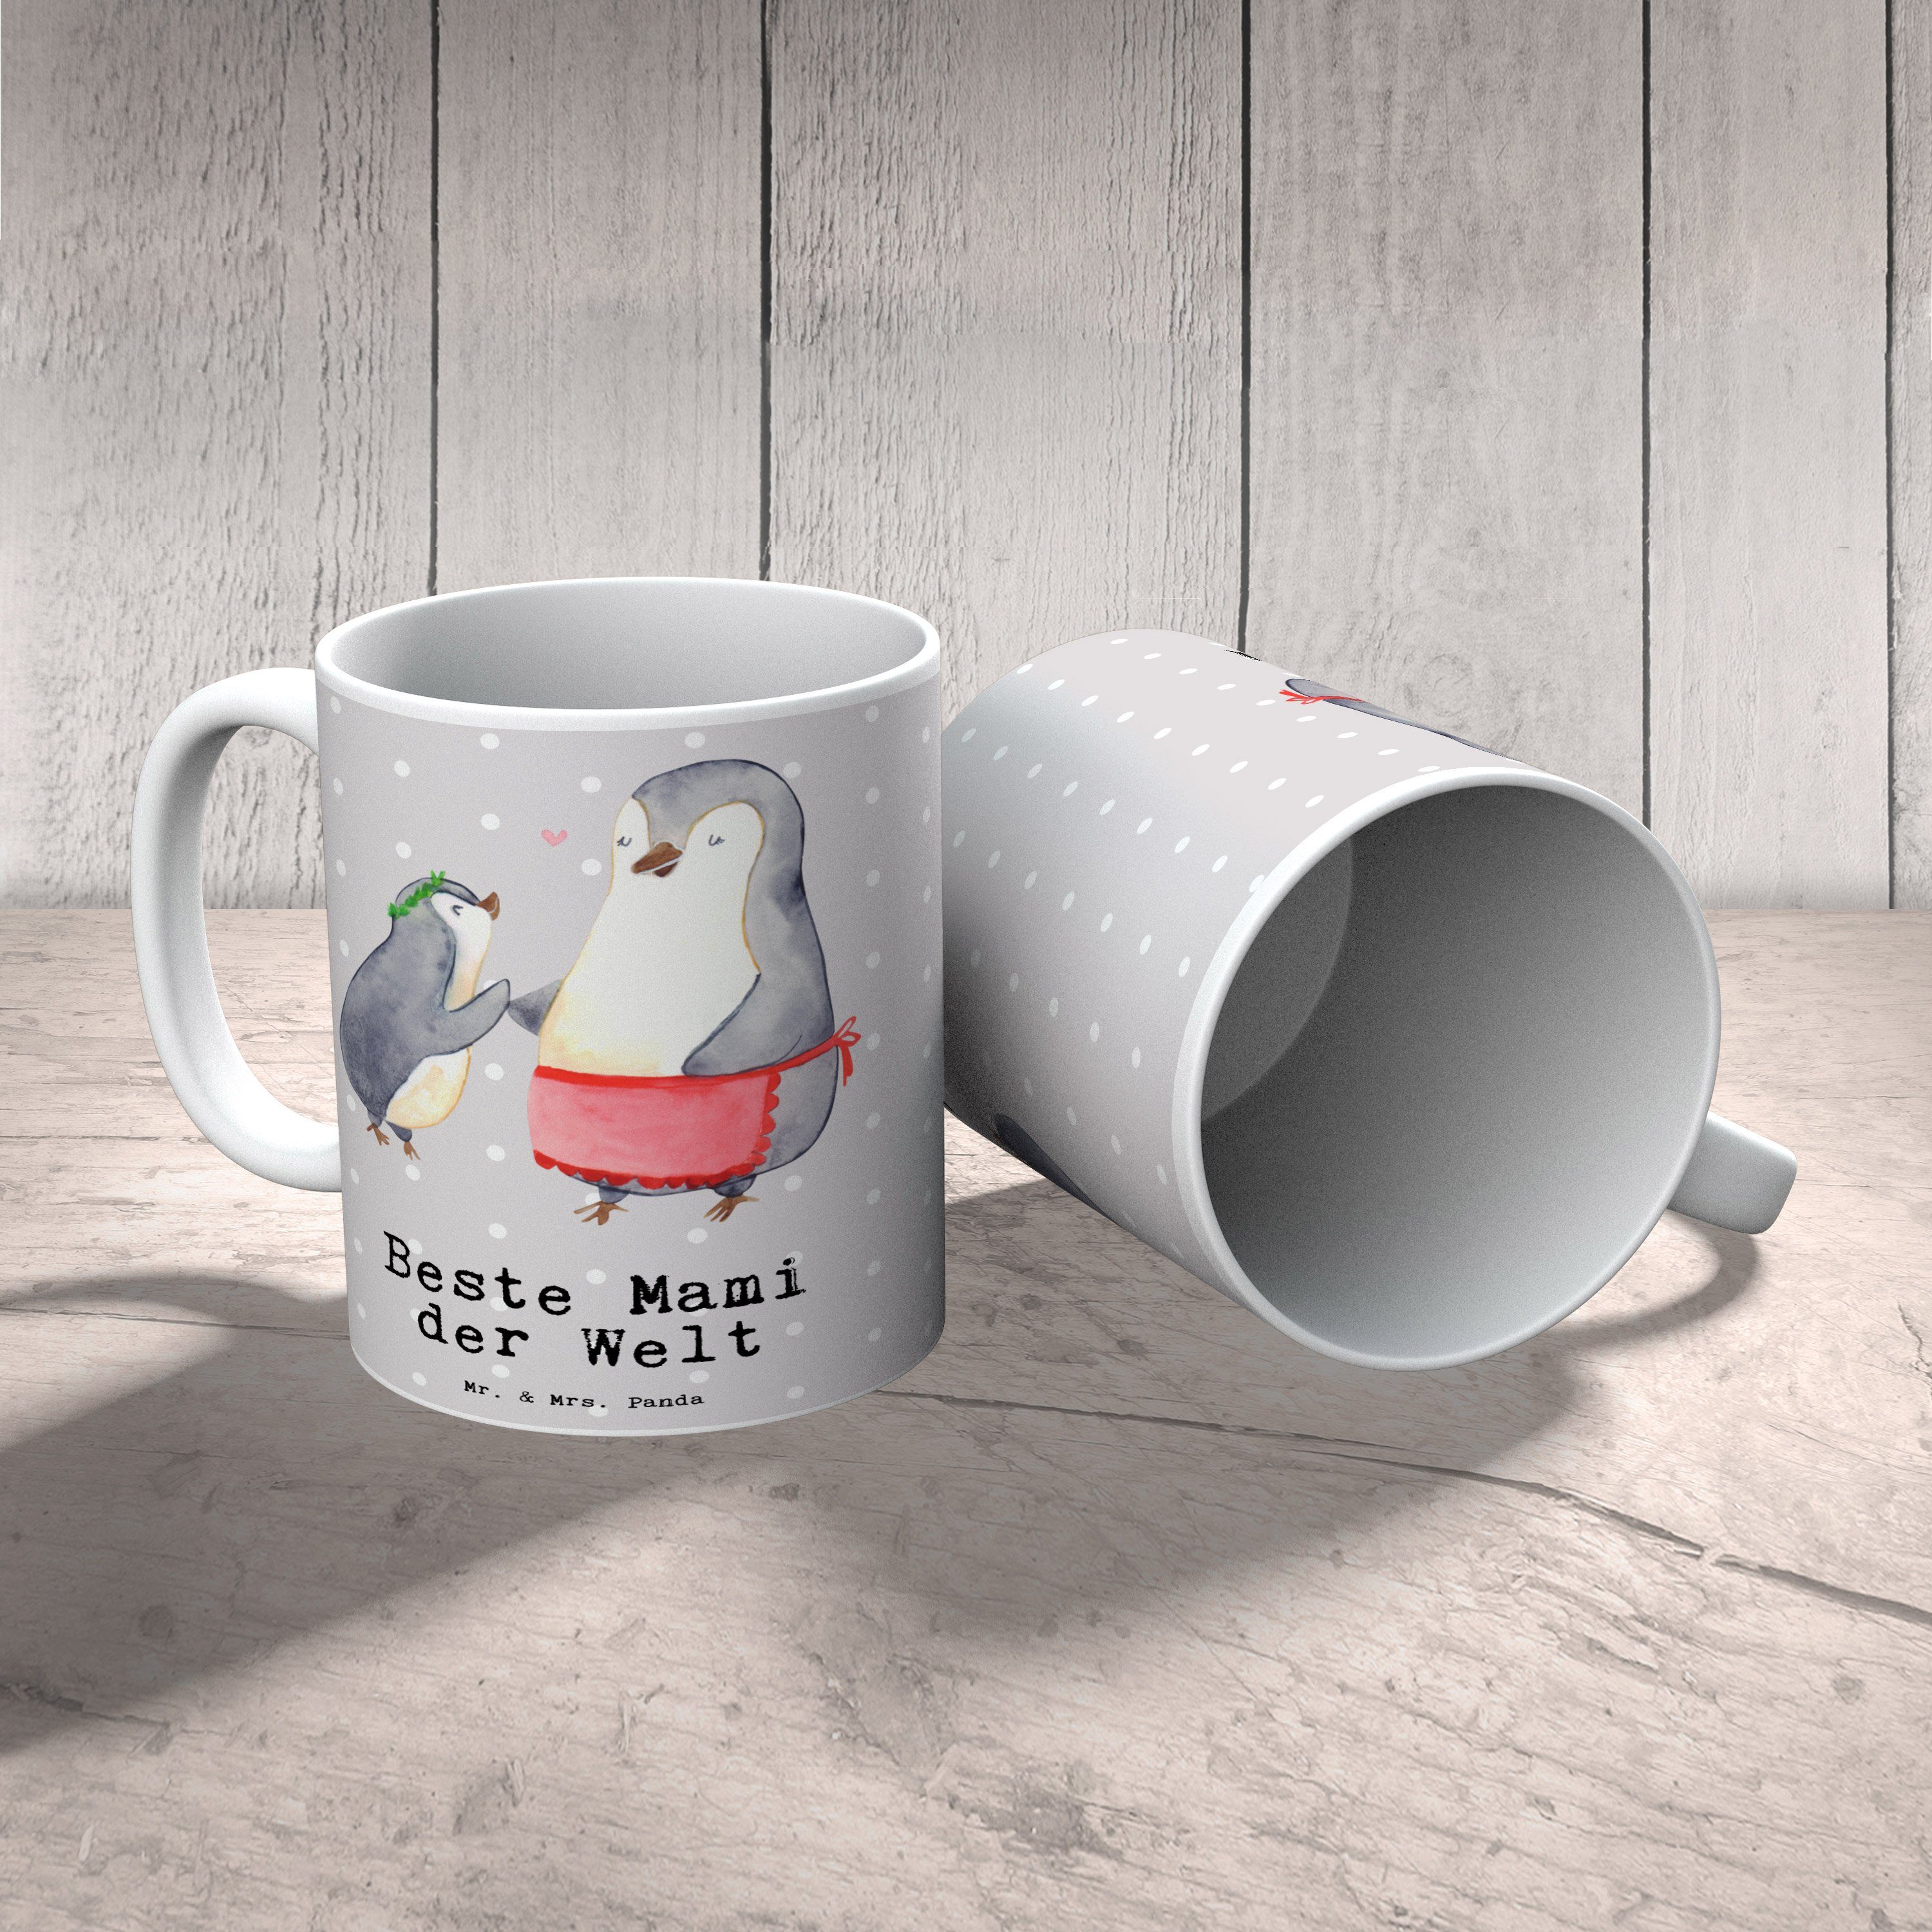 Mr. & Mrs. Panda Tasse Keramik - - Welt Pinguin der Pastell Keramiktasse, Grau Geschenk, Mami Beste